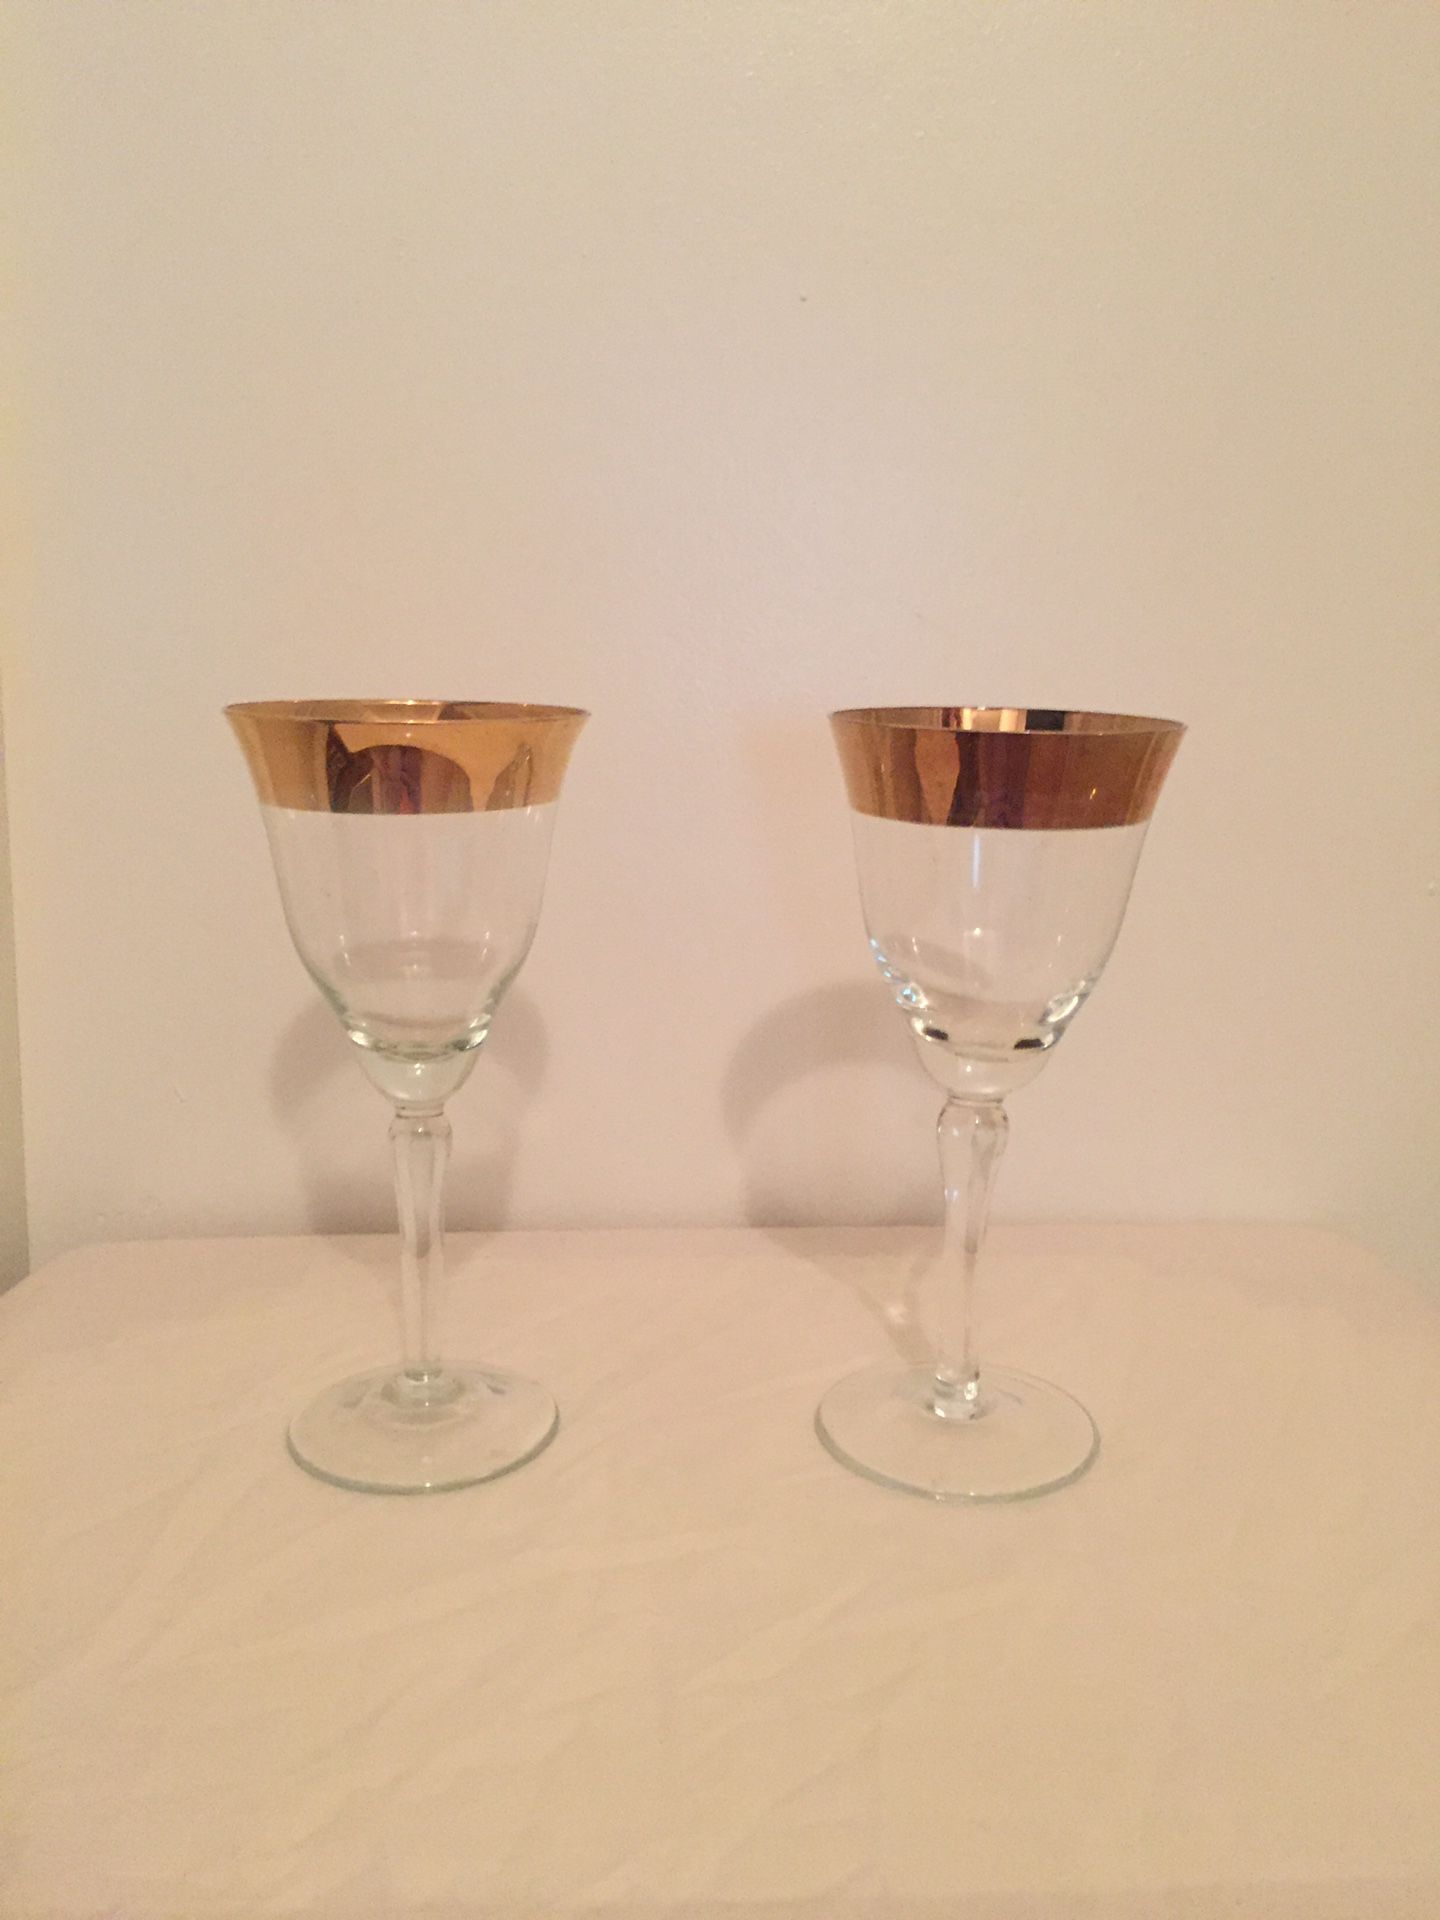 Antique glass wine goblet set with gold trim